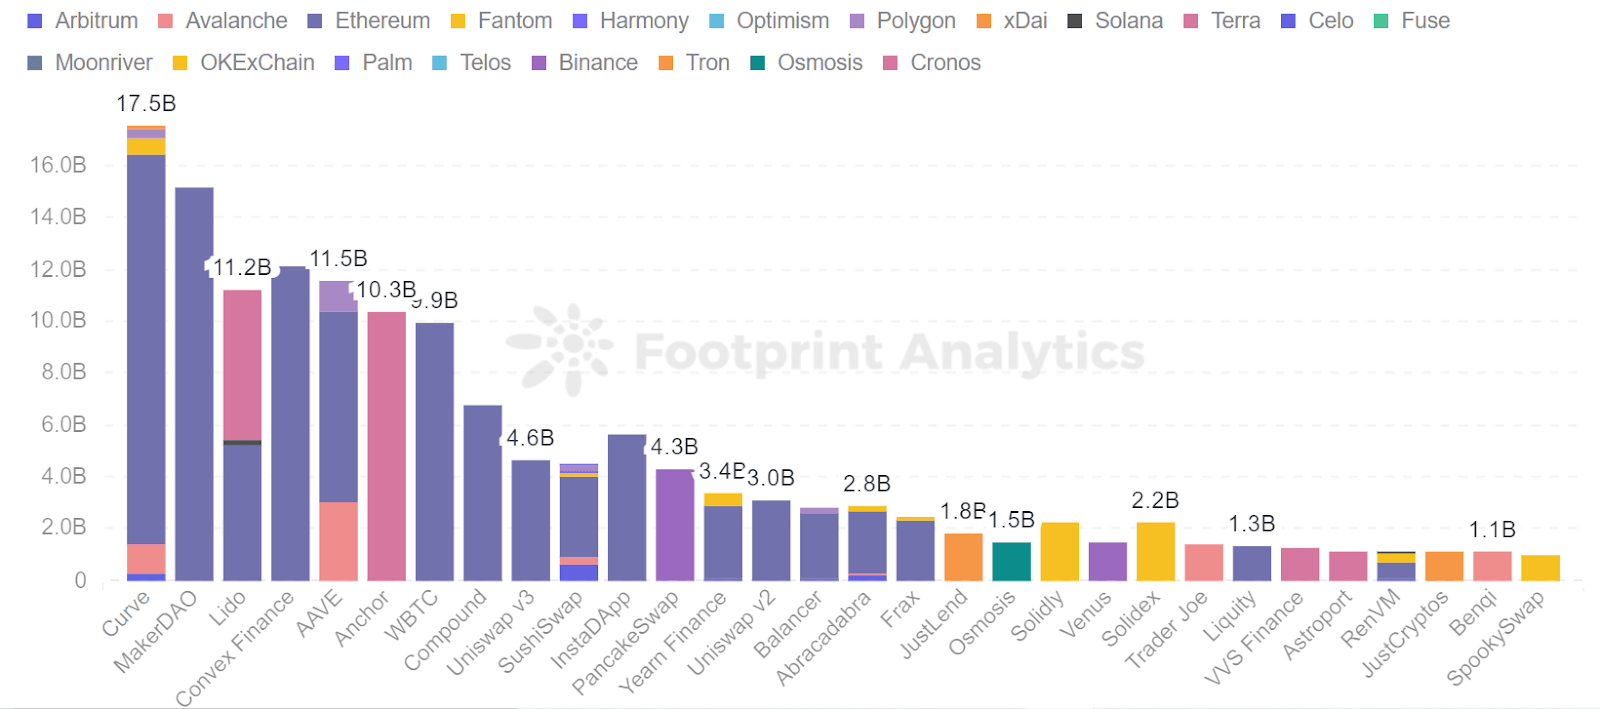 Footprint Analytics - TVL by Protocols(Feb. 28, 2022)